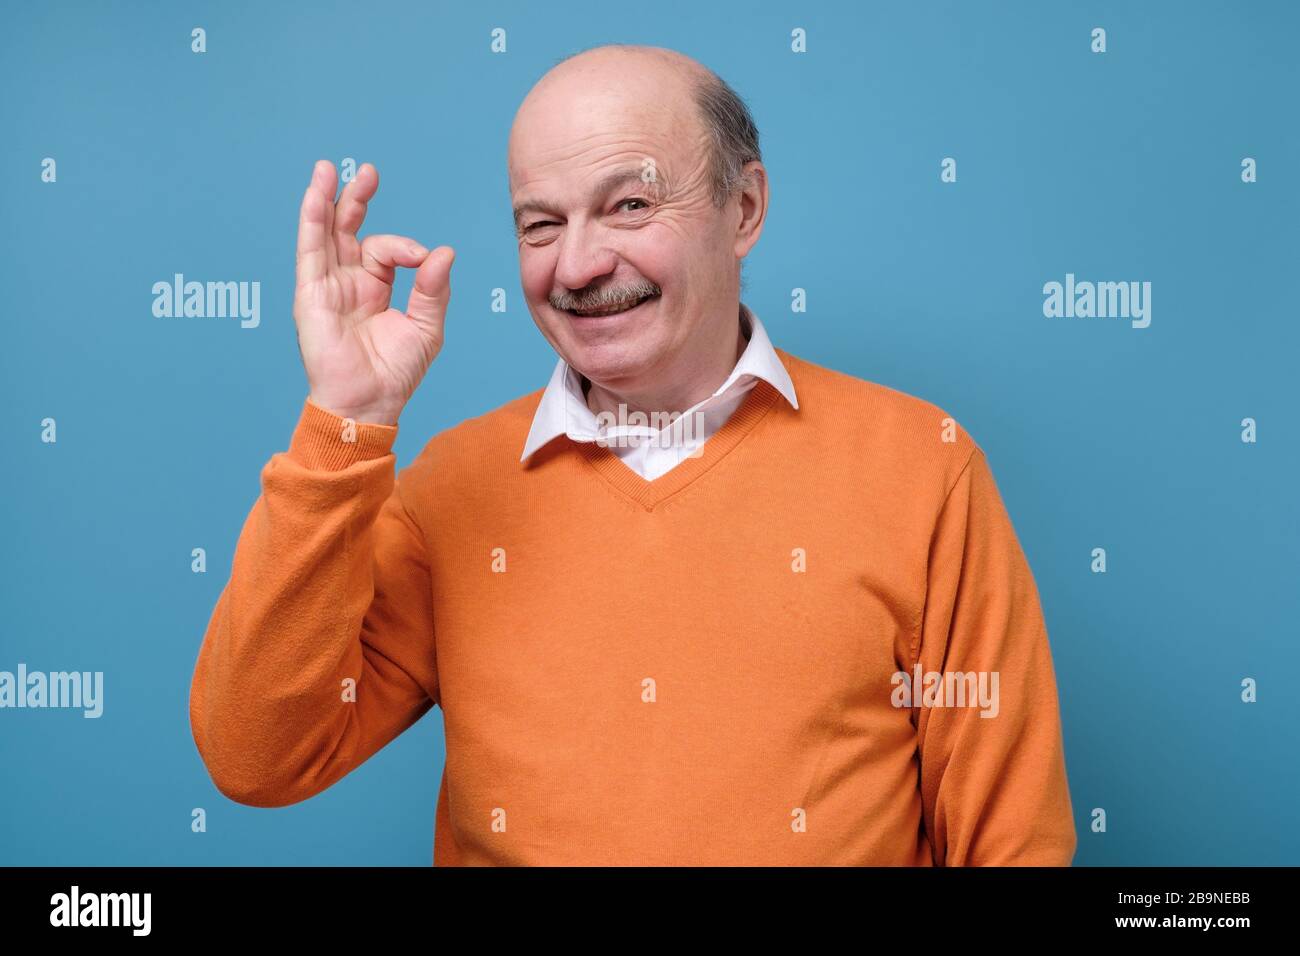 Senior spanish man showing OK sign approving choice. Stock Photo